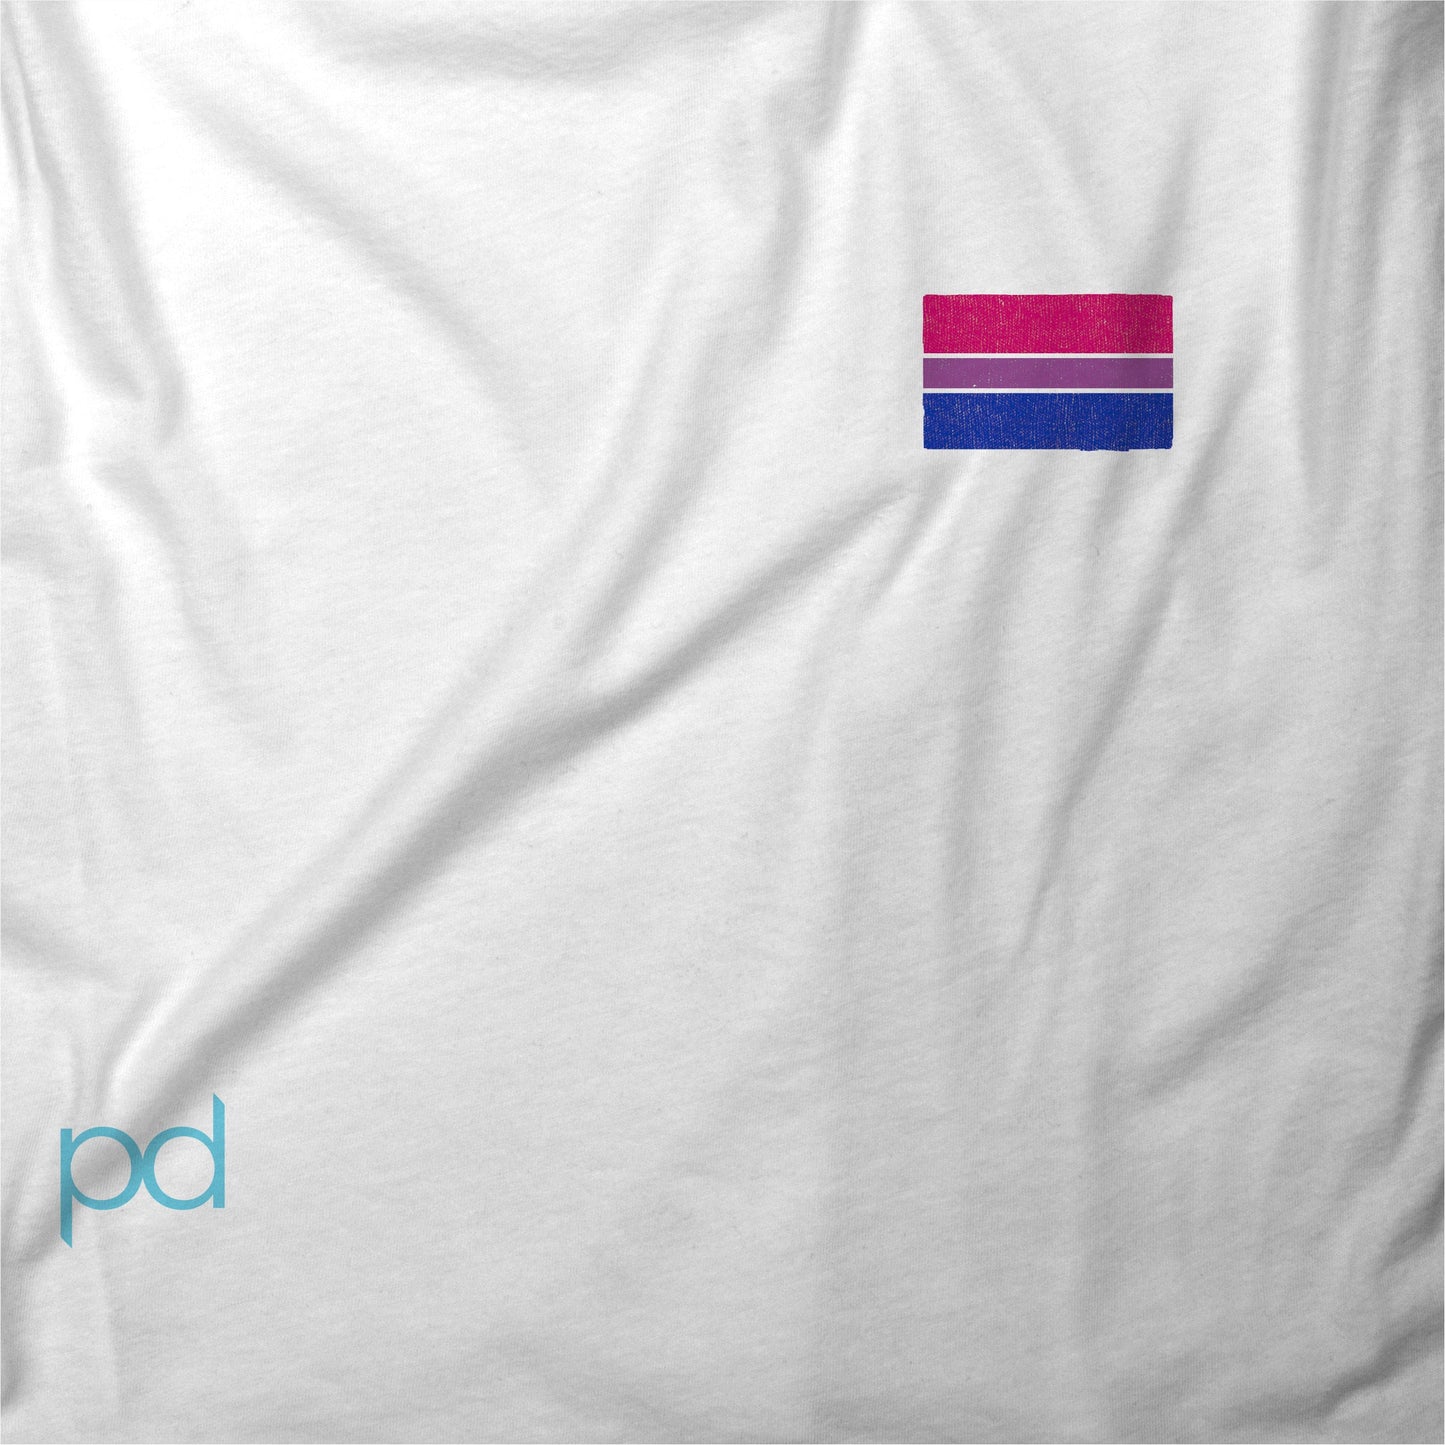 Bi Pride Flag T-Shirt, Subtle Bisexual Left Pocket Chest Tee Top, LGBTQ+  Bisexuality Awareness Stripe Unisex T Shirt